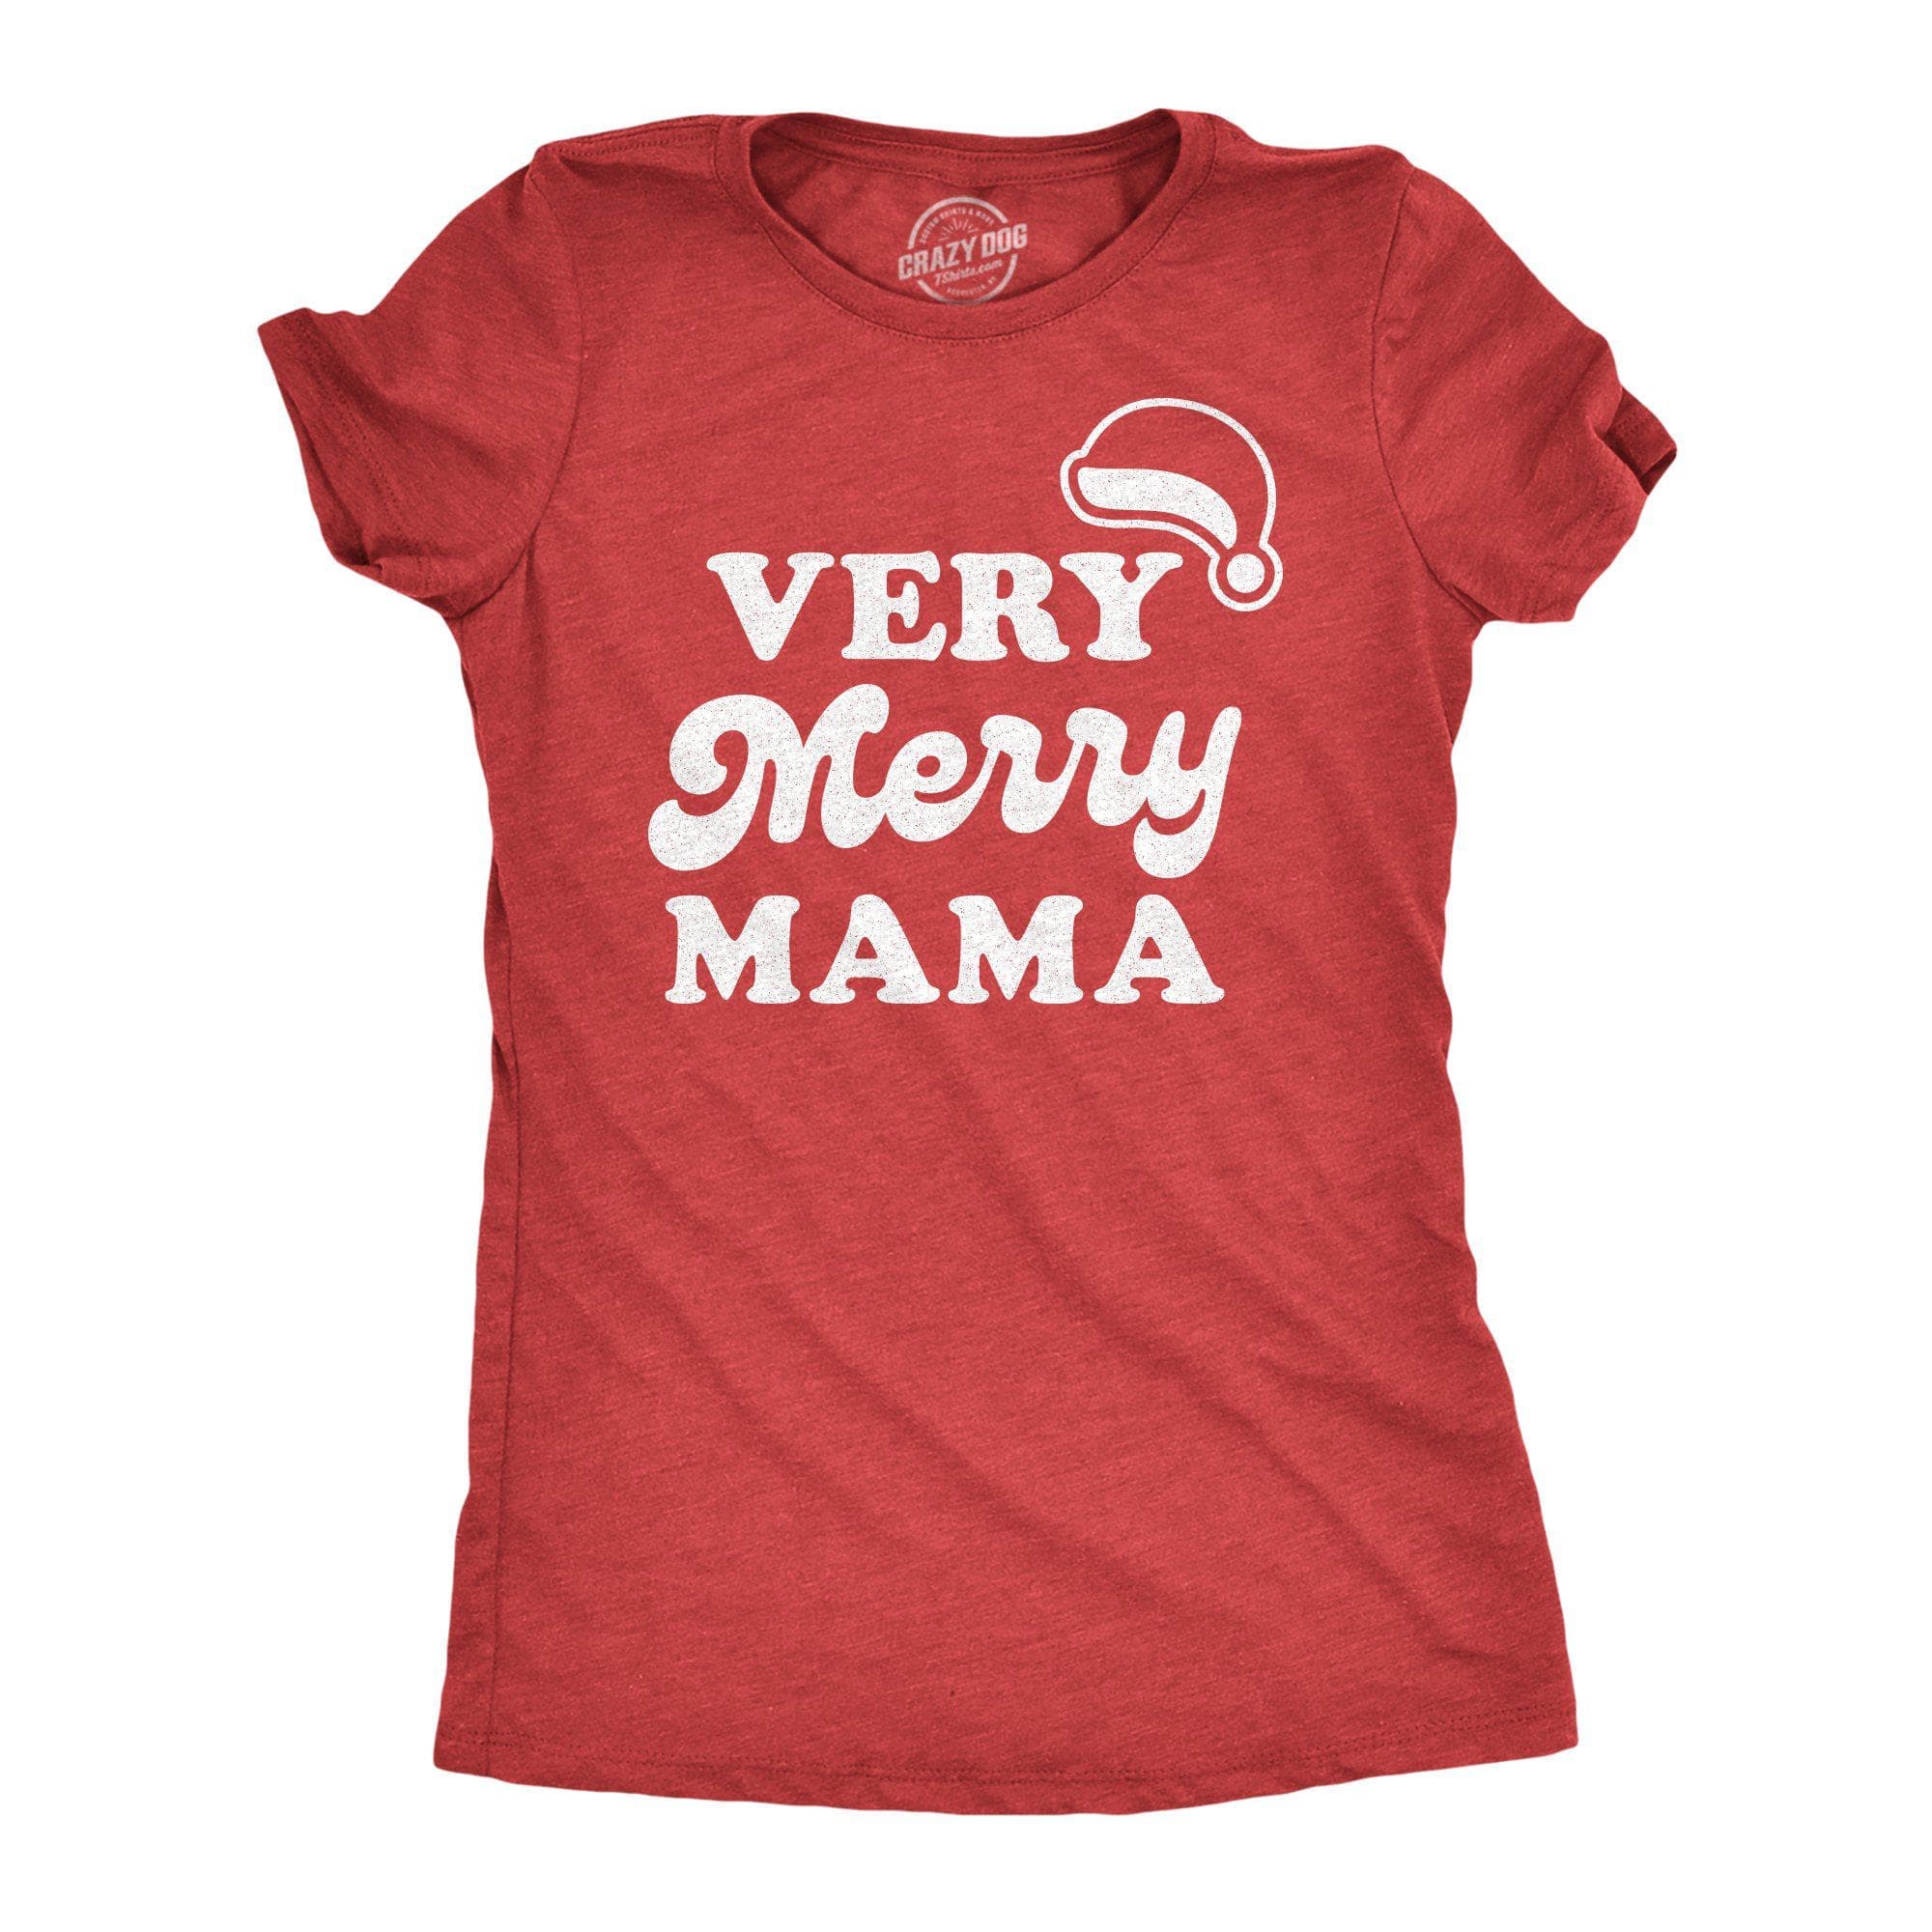 Very Merry Mama Women's Tshirt - Crazy Dog T-Shirts